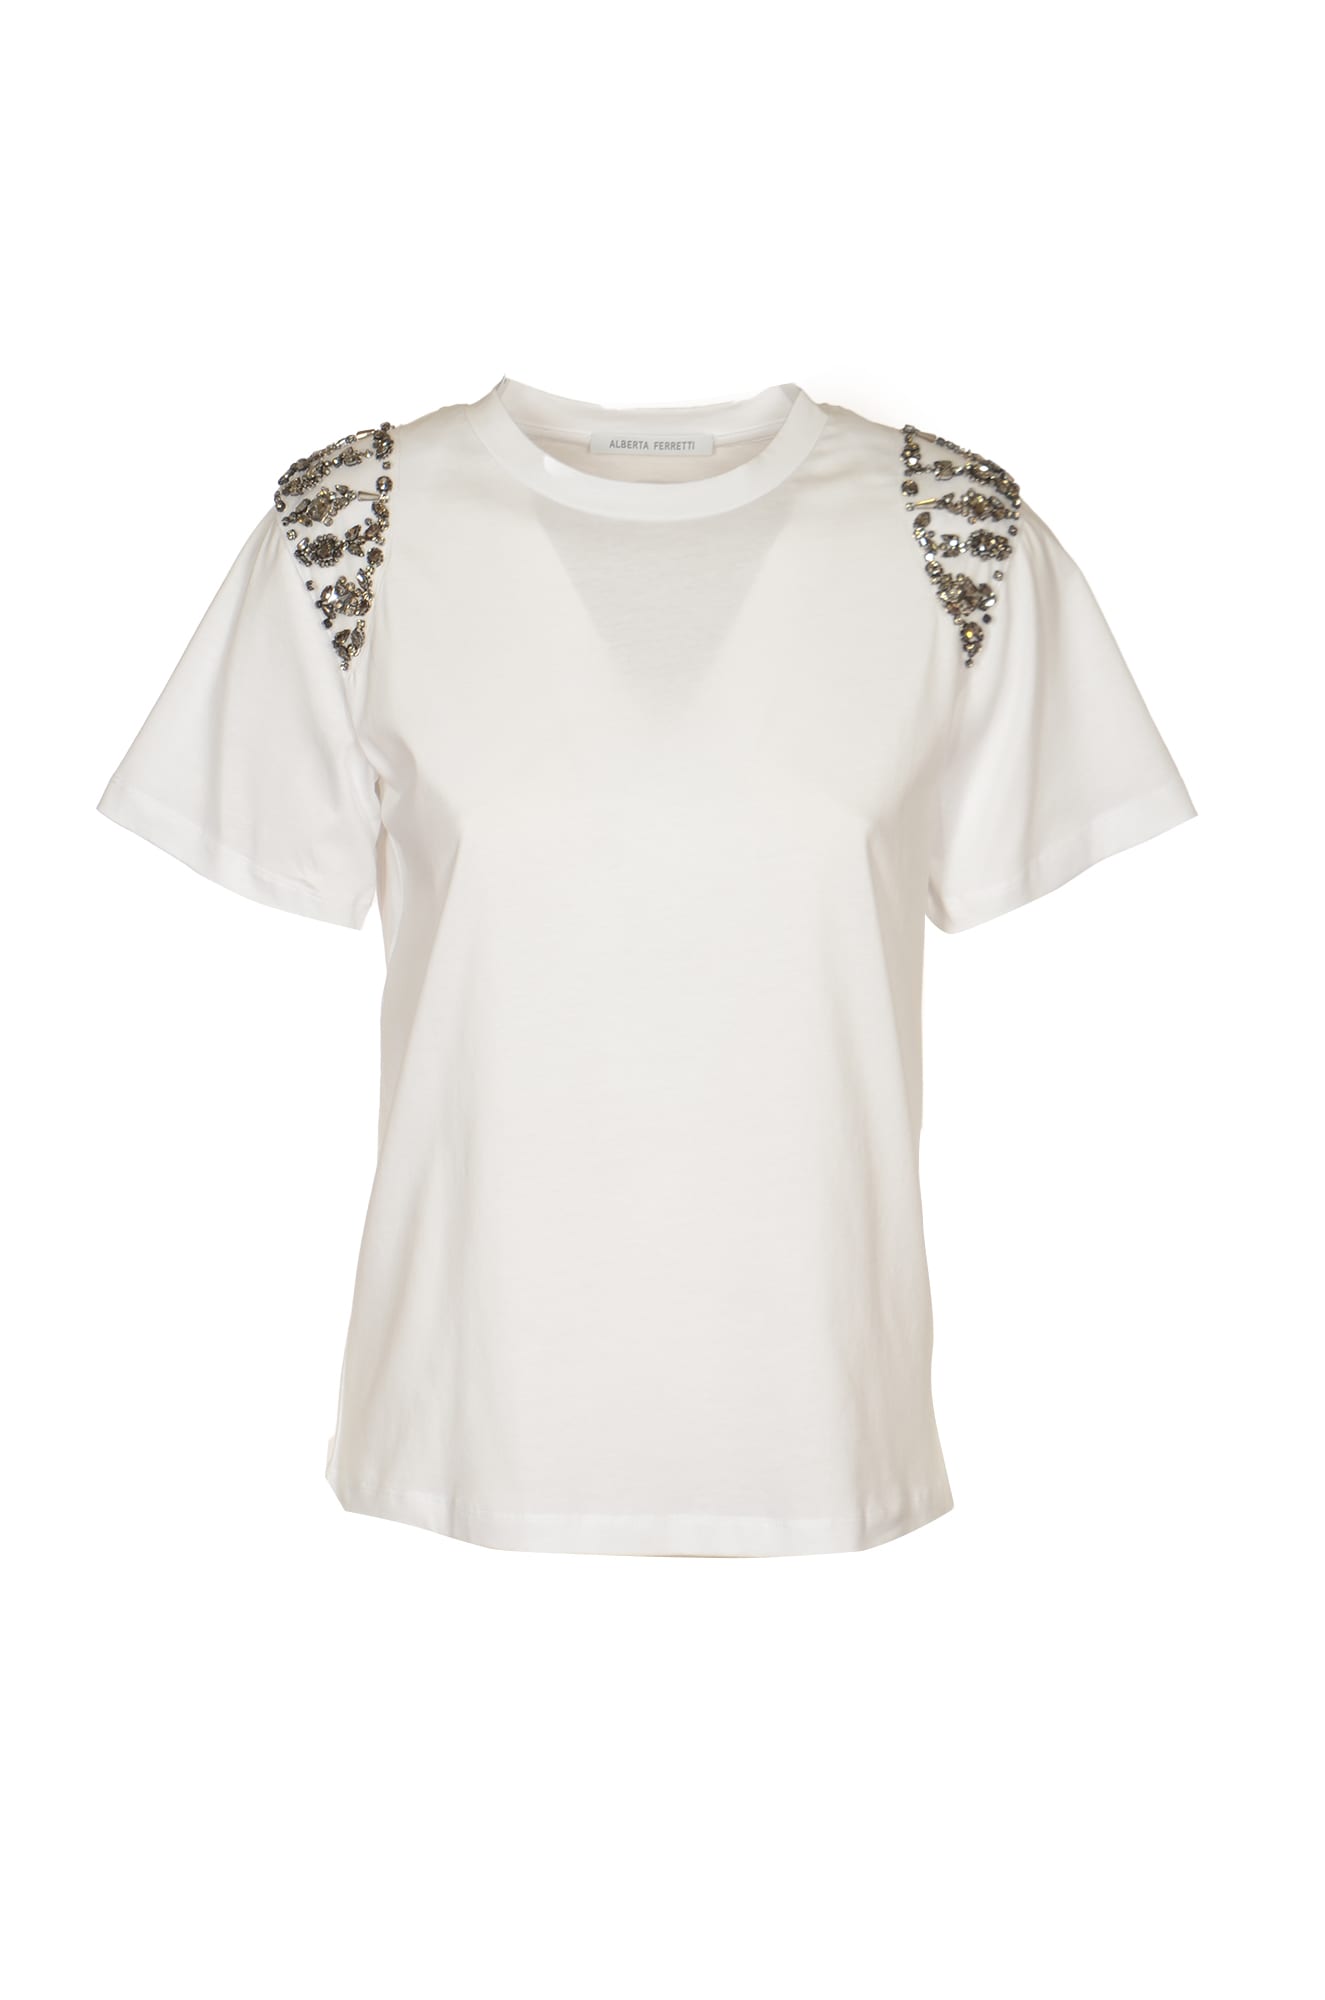 Alberta Ferretti Rhinestone Embellished Round Neck T-shirt In White